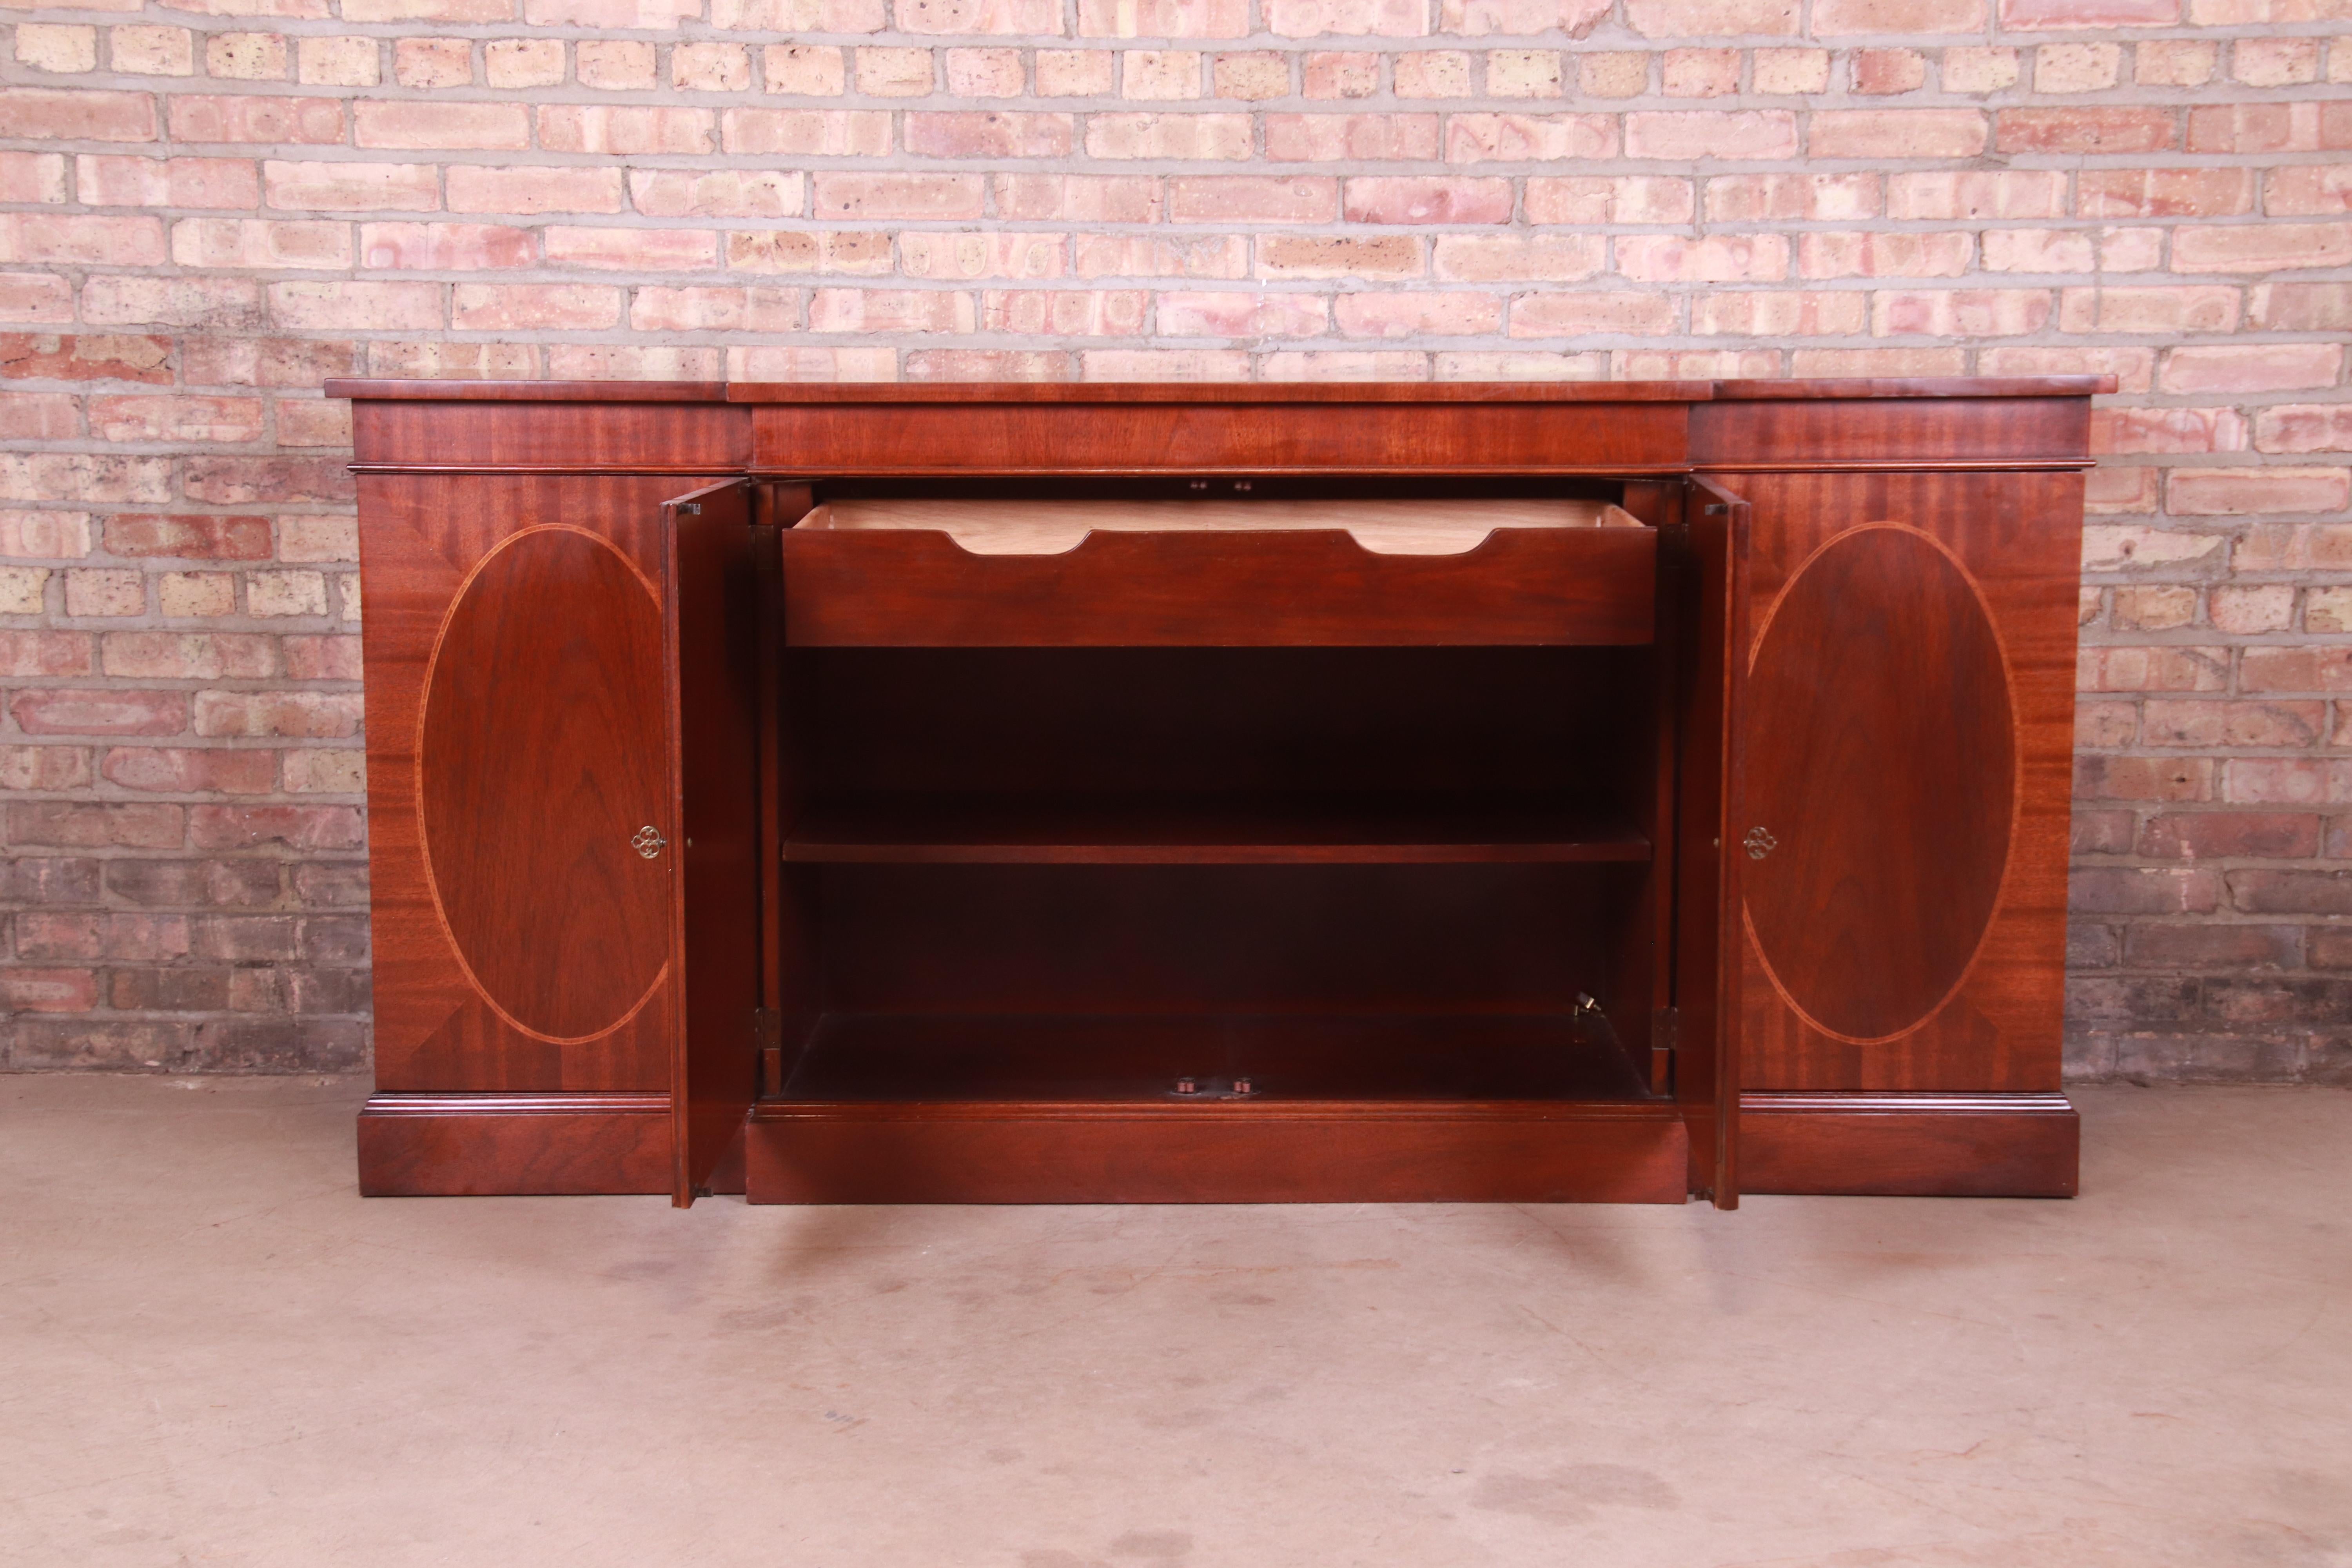 Baker Furniture Georgian Inlaid Mahogany Sideboard, Credenza, or Bar Cabinet 1